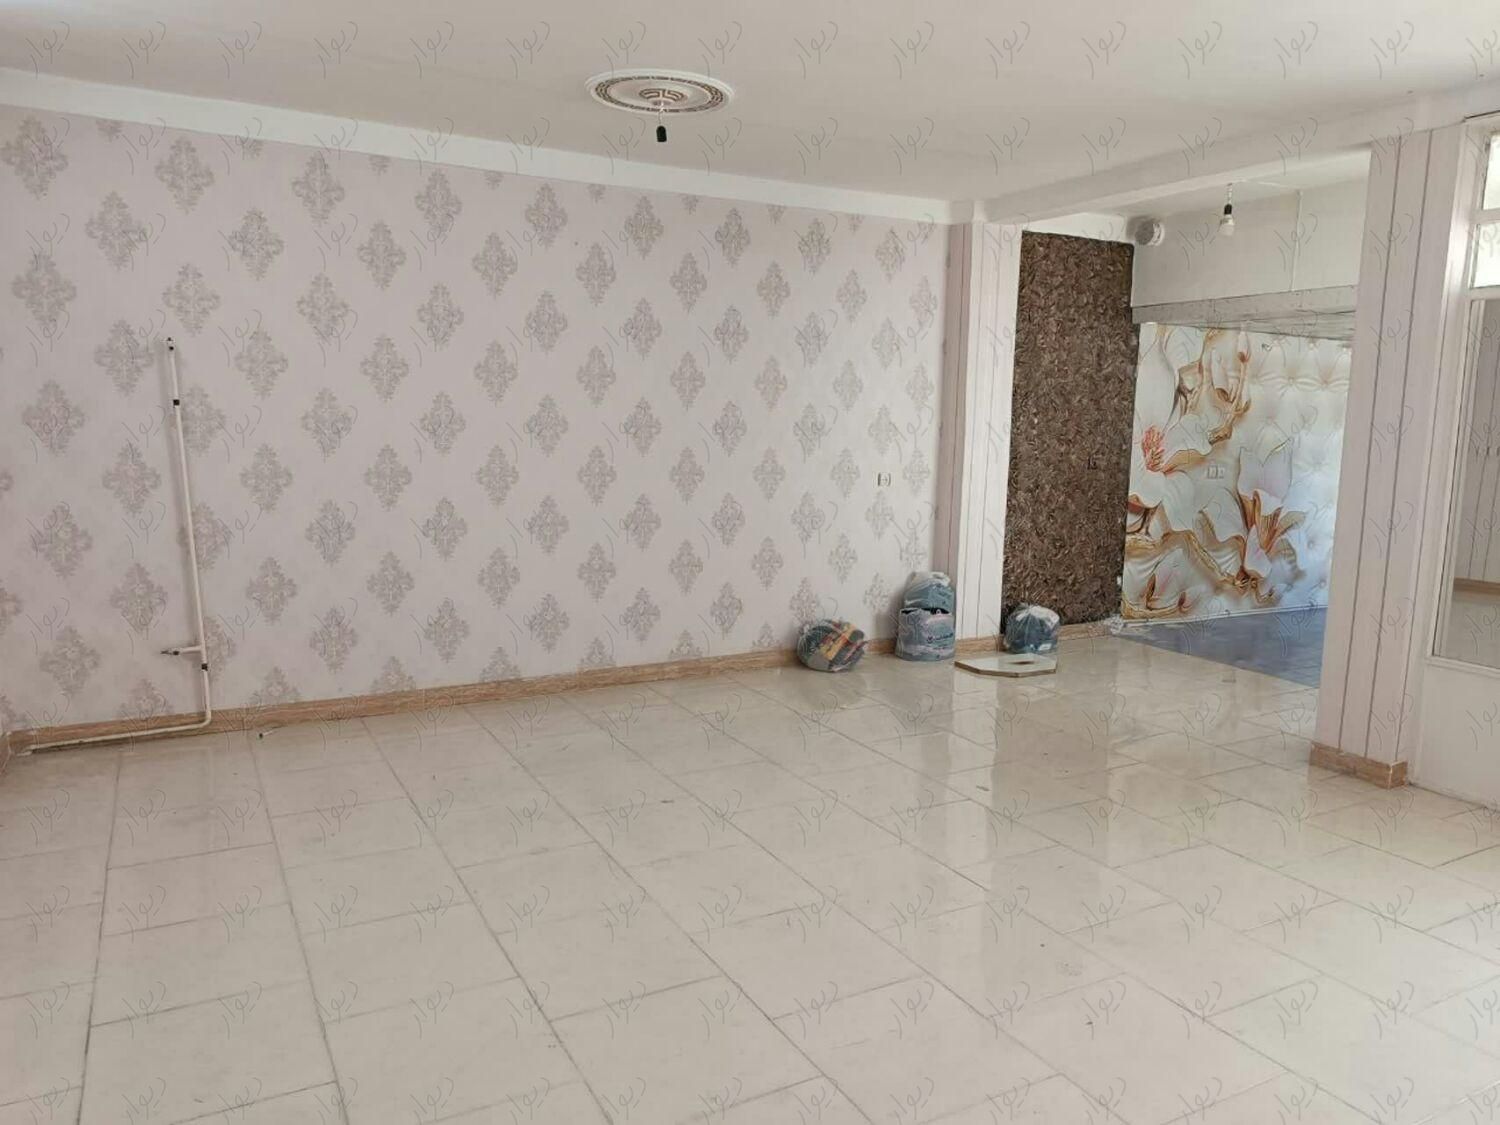 طبقه اول خانه ویلایی|اجارهٔ خانه و ویلا|تهران, خزانه|دیوار